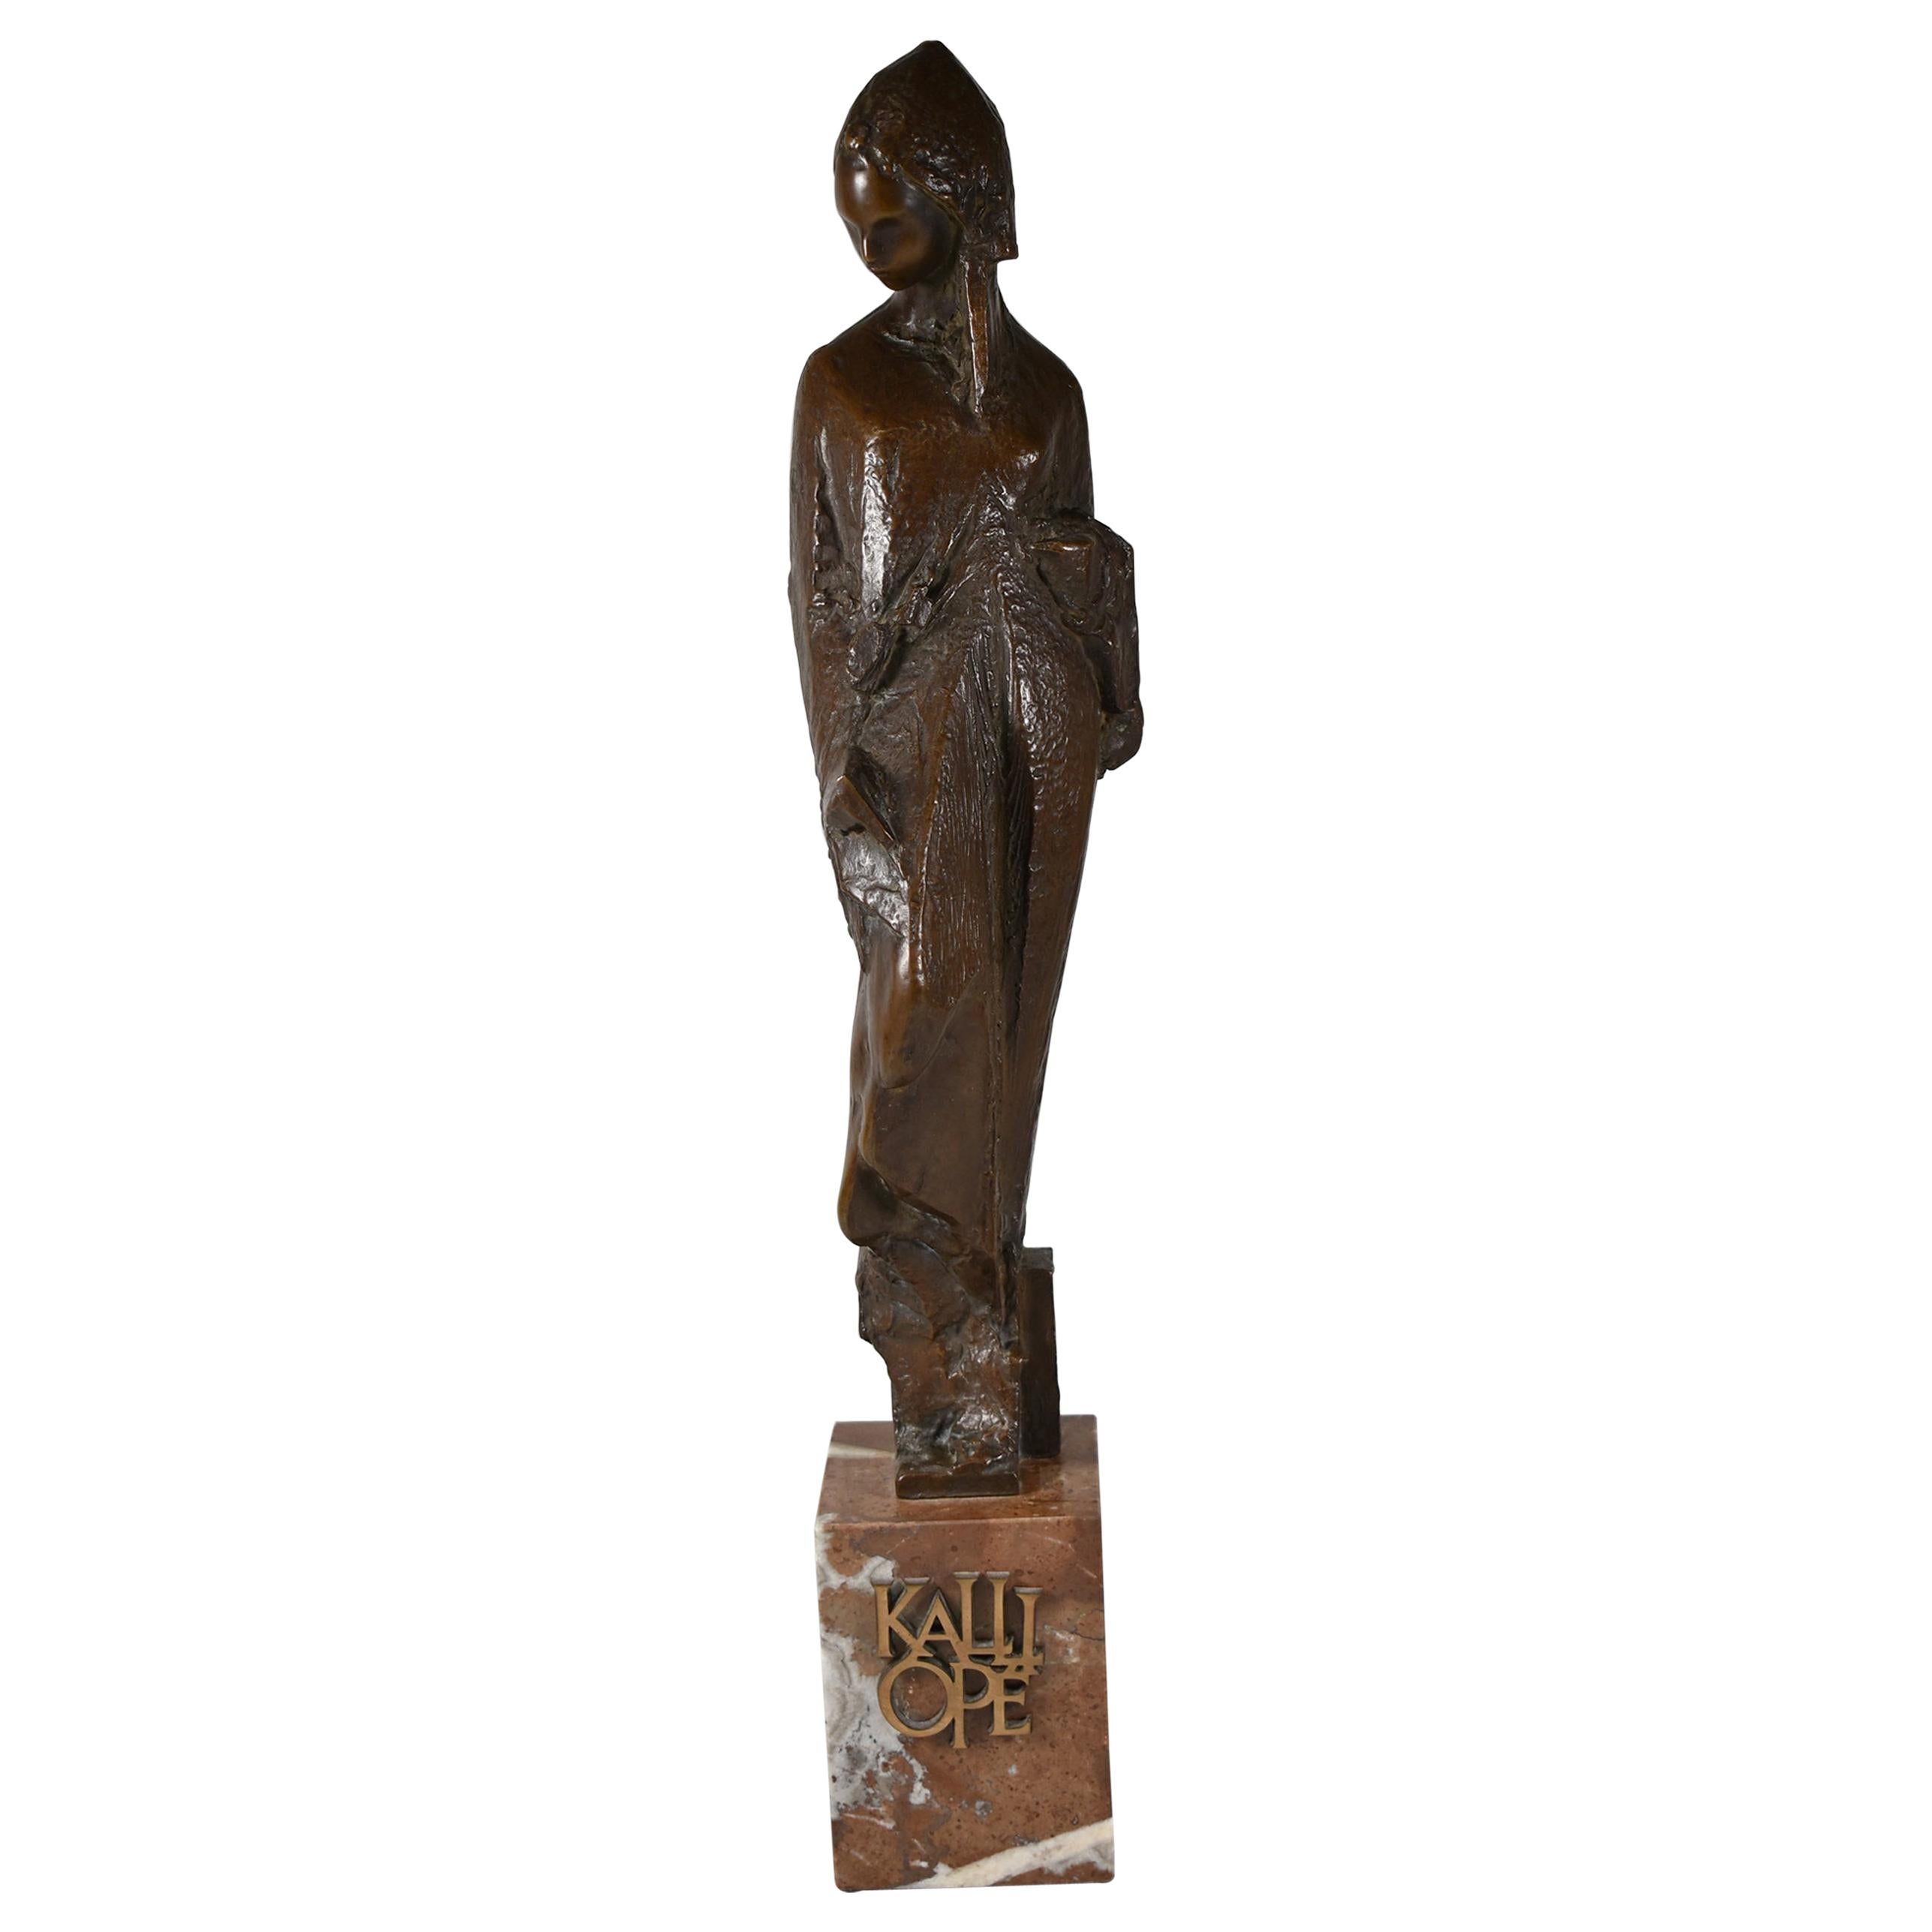 Modern Bronze Figurative Female Sculpture by Jan Hanna " Kalli Ope